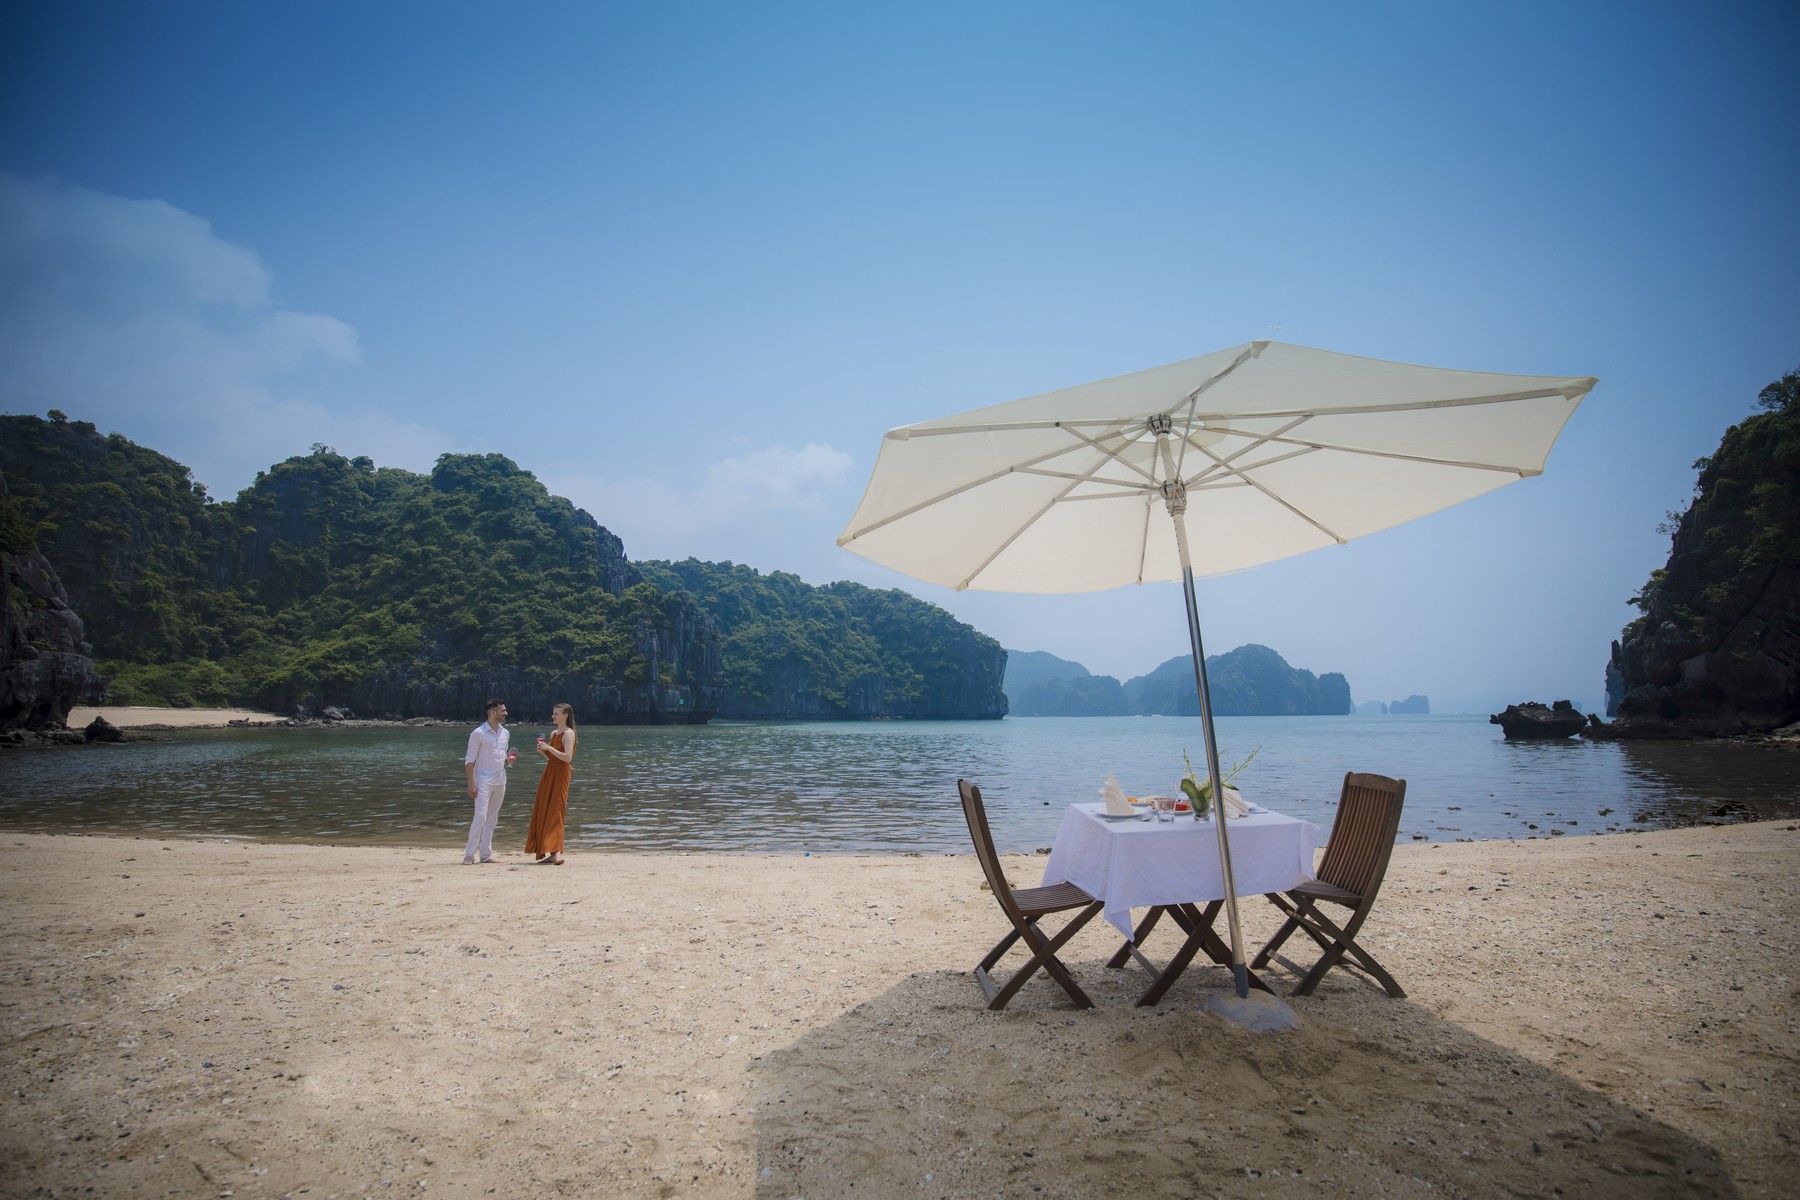 Enjoy the private beach on Bai Tu Long Bay